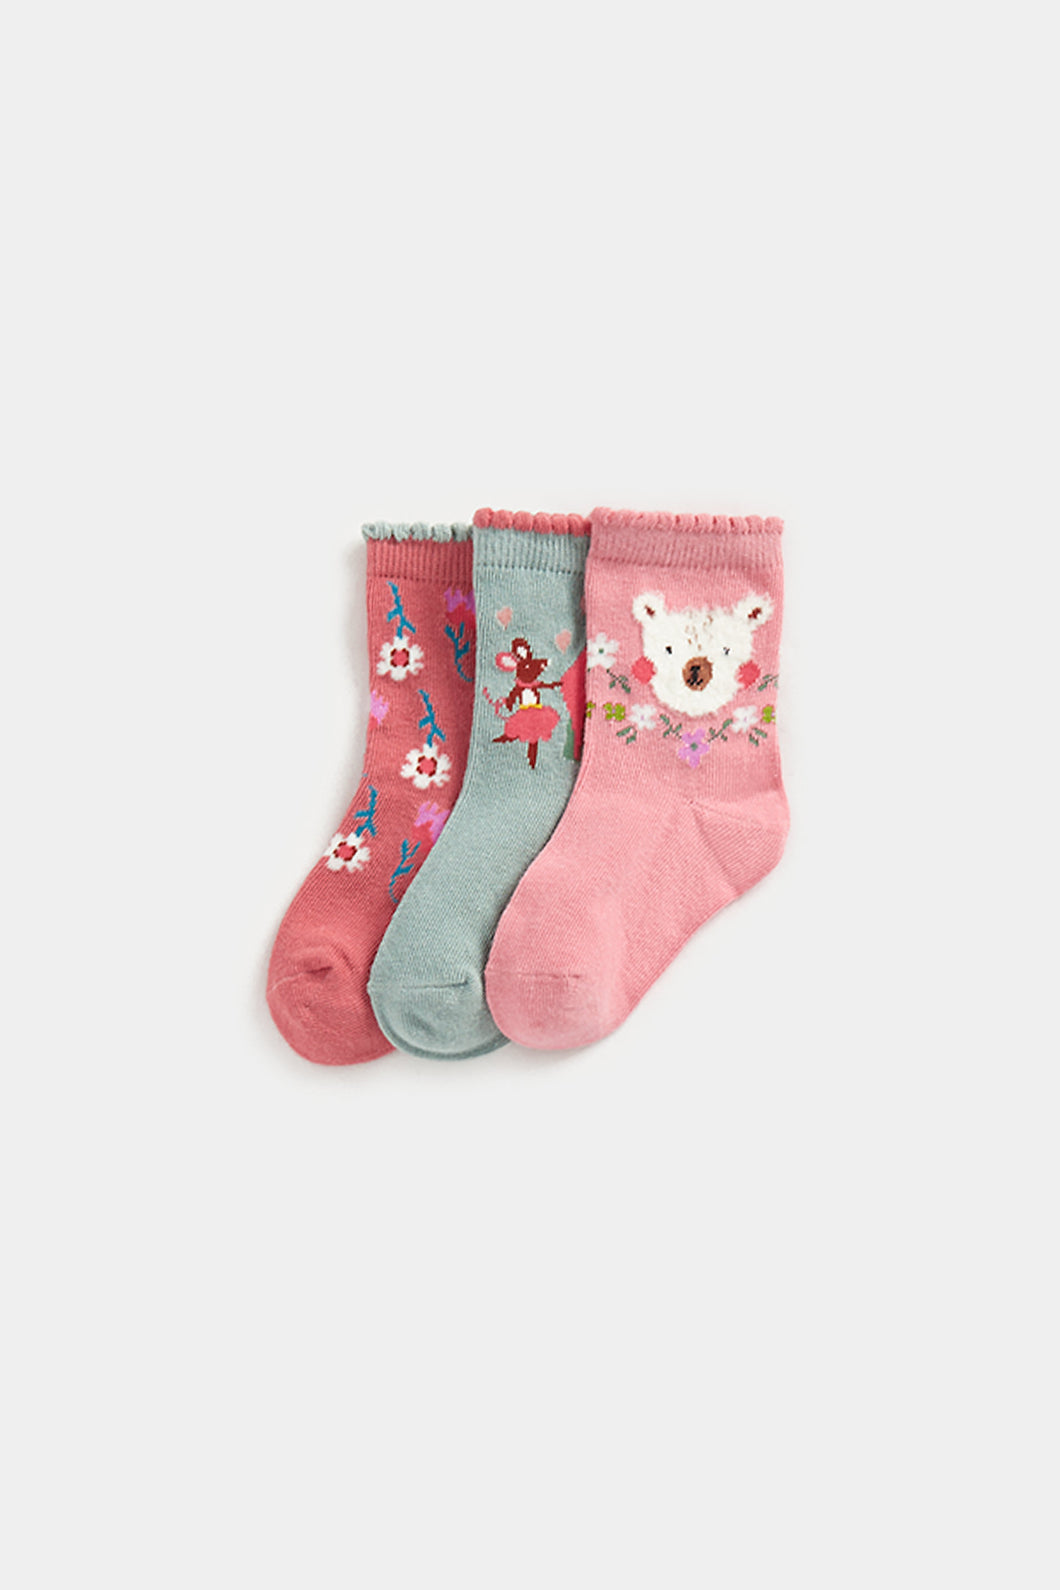 Mothercare Nostalgia Socks - 3 Pack